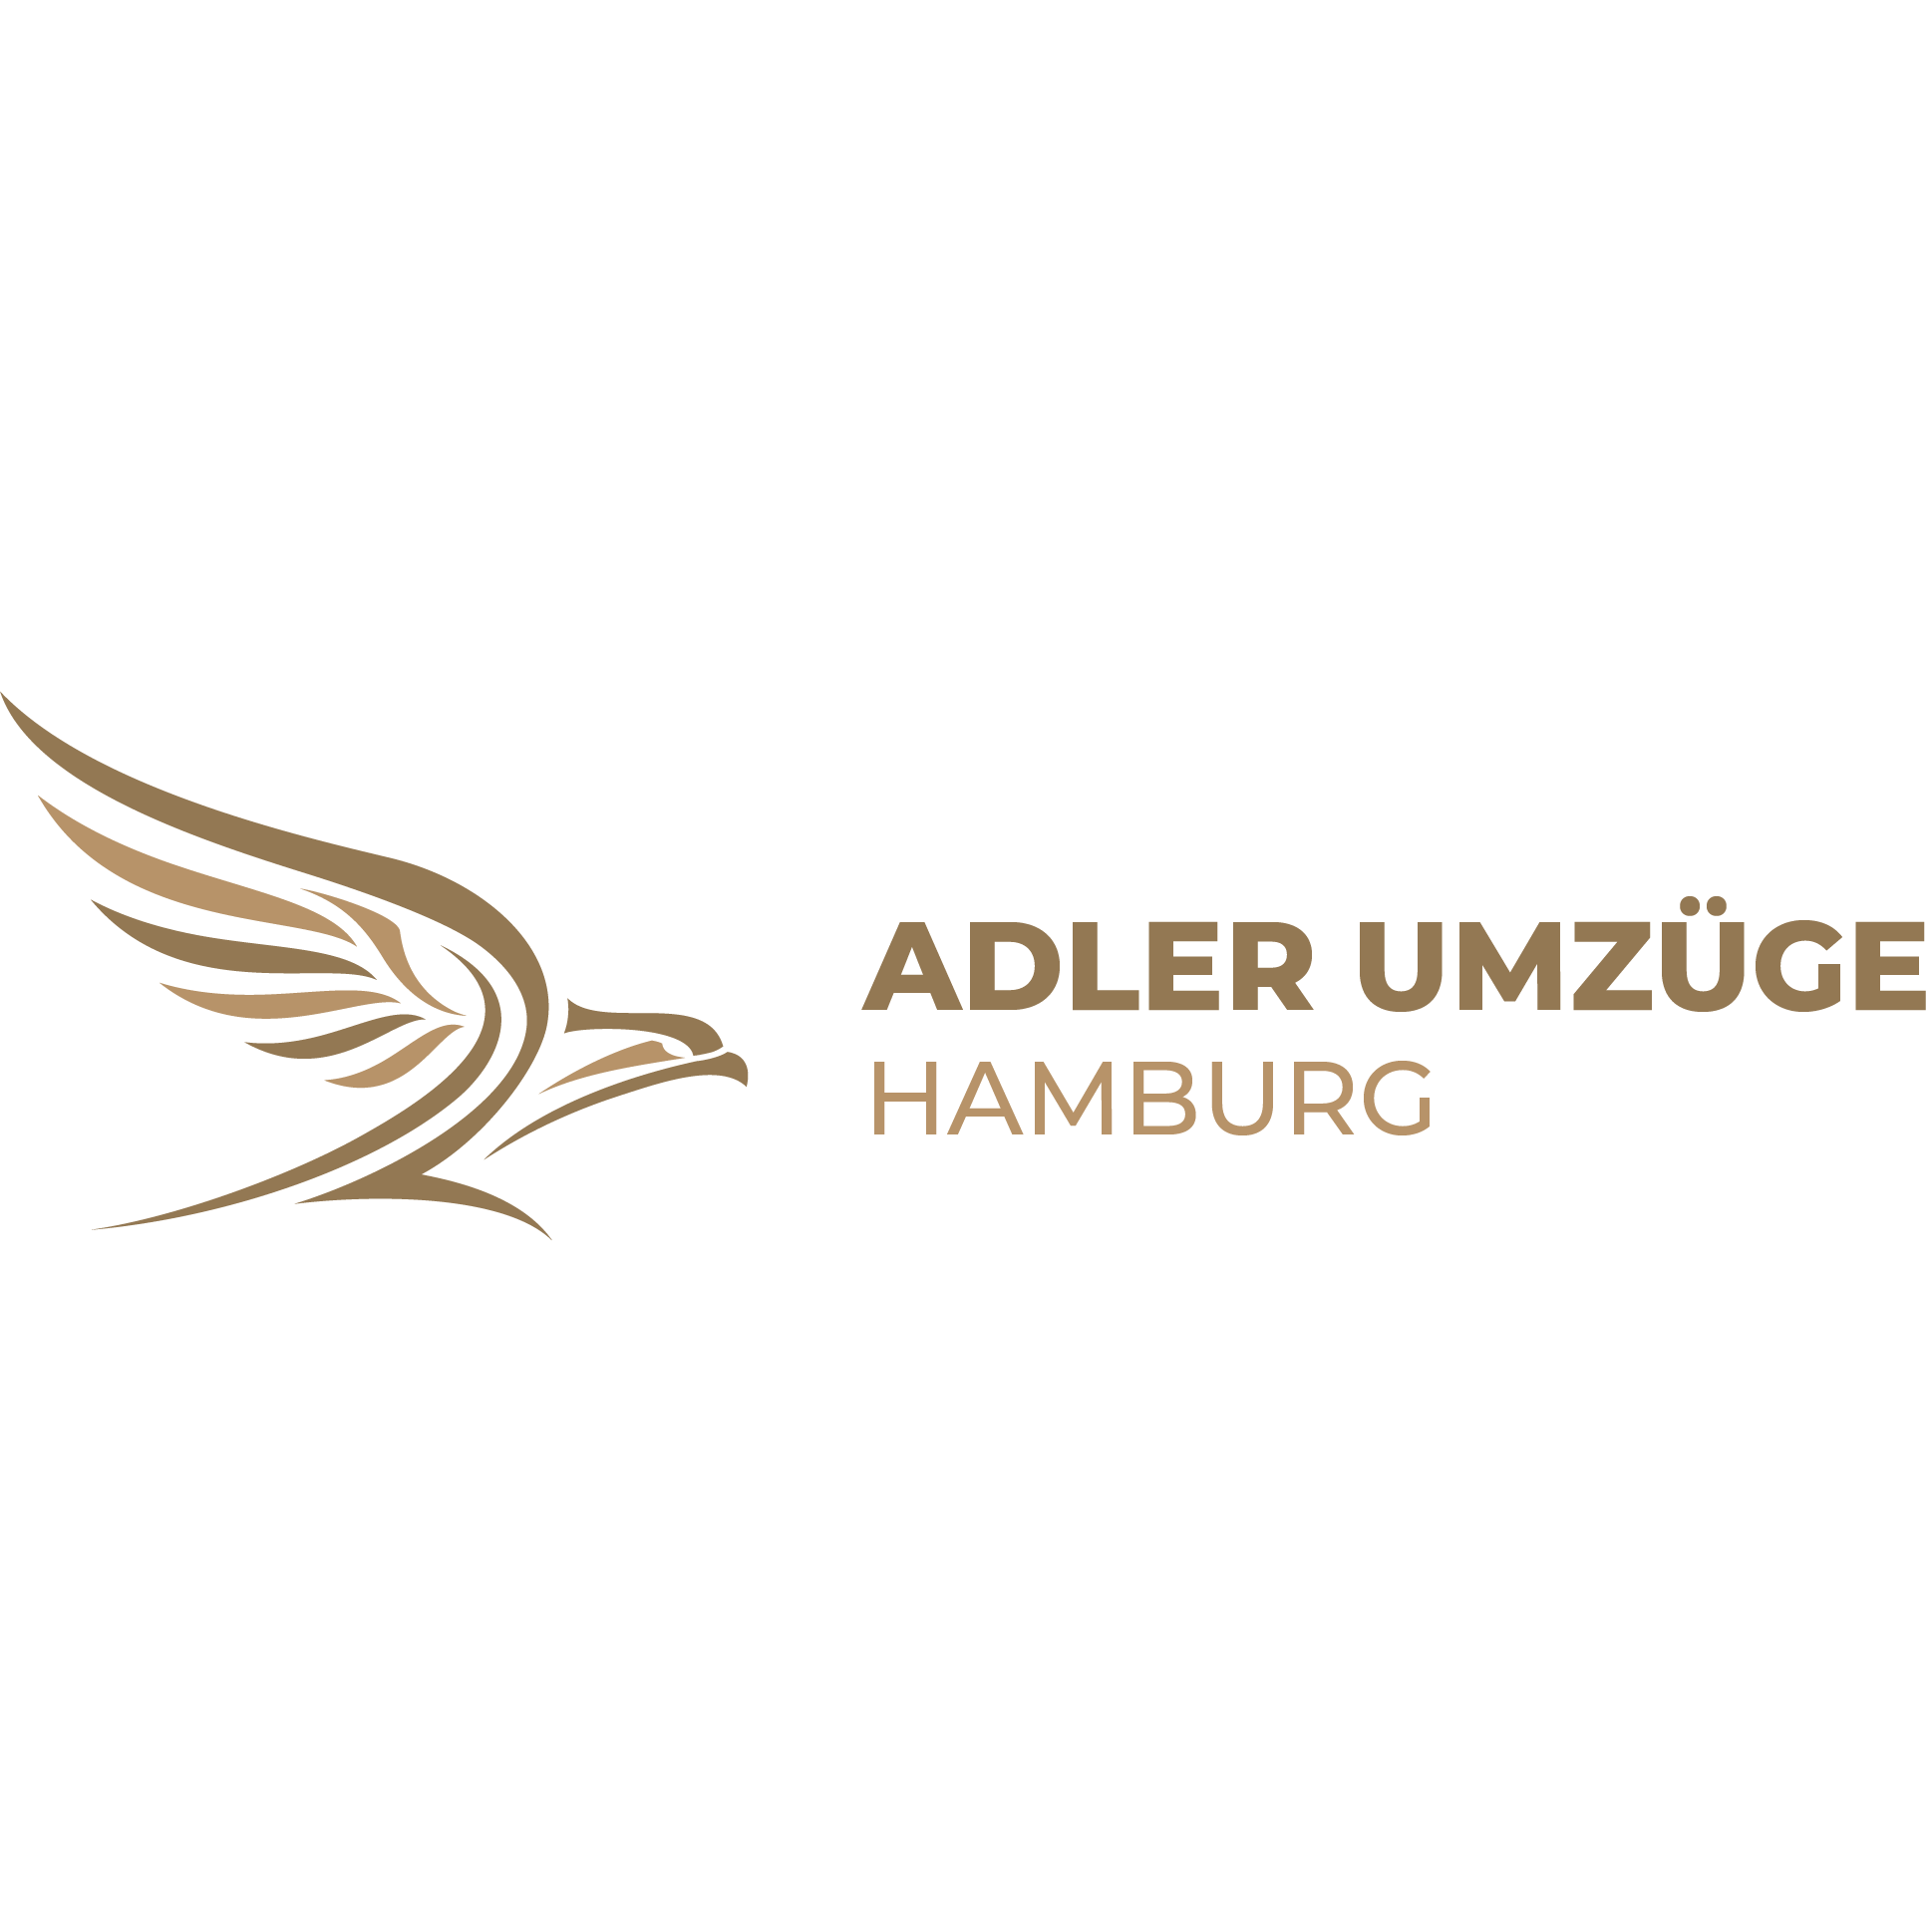 Adler Umzüge in Hamburg - Logo